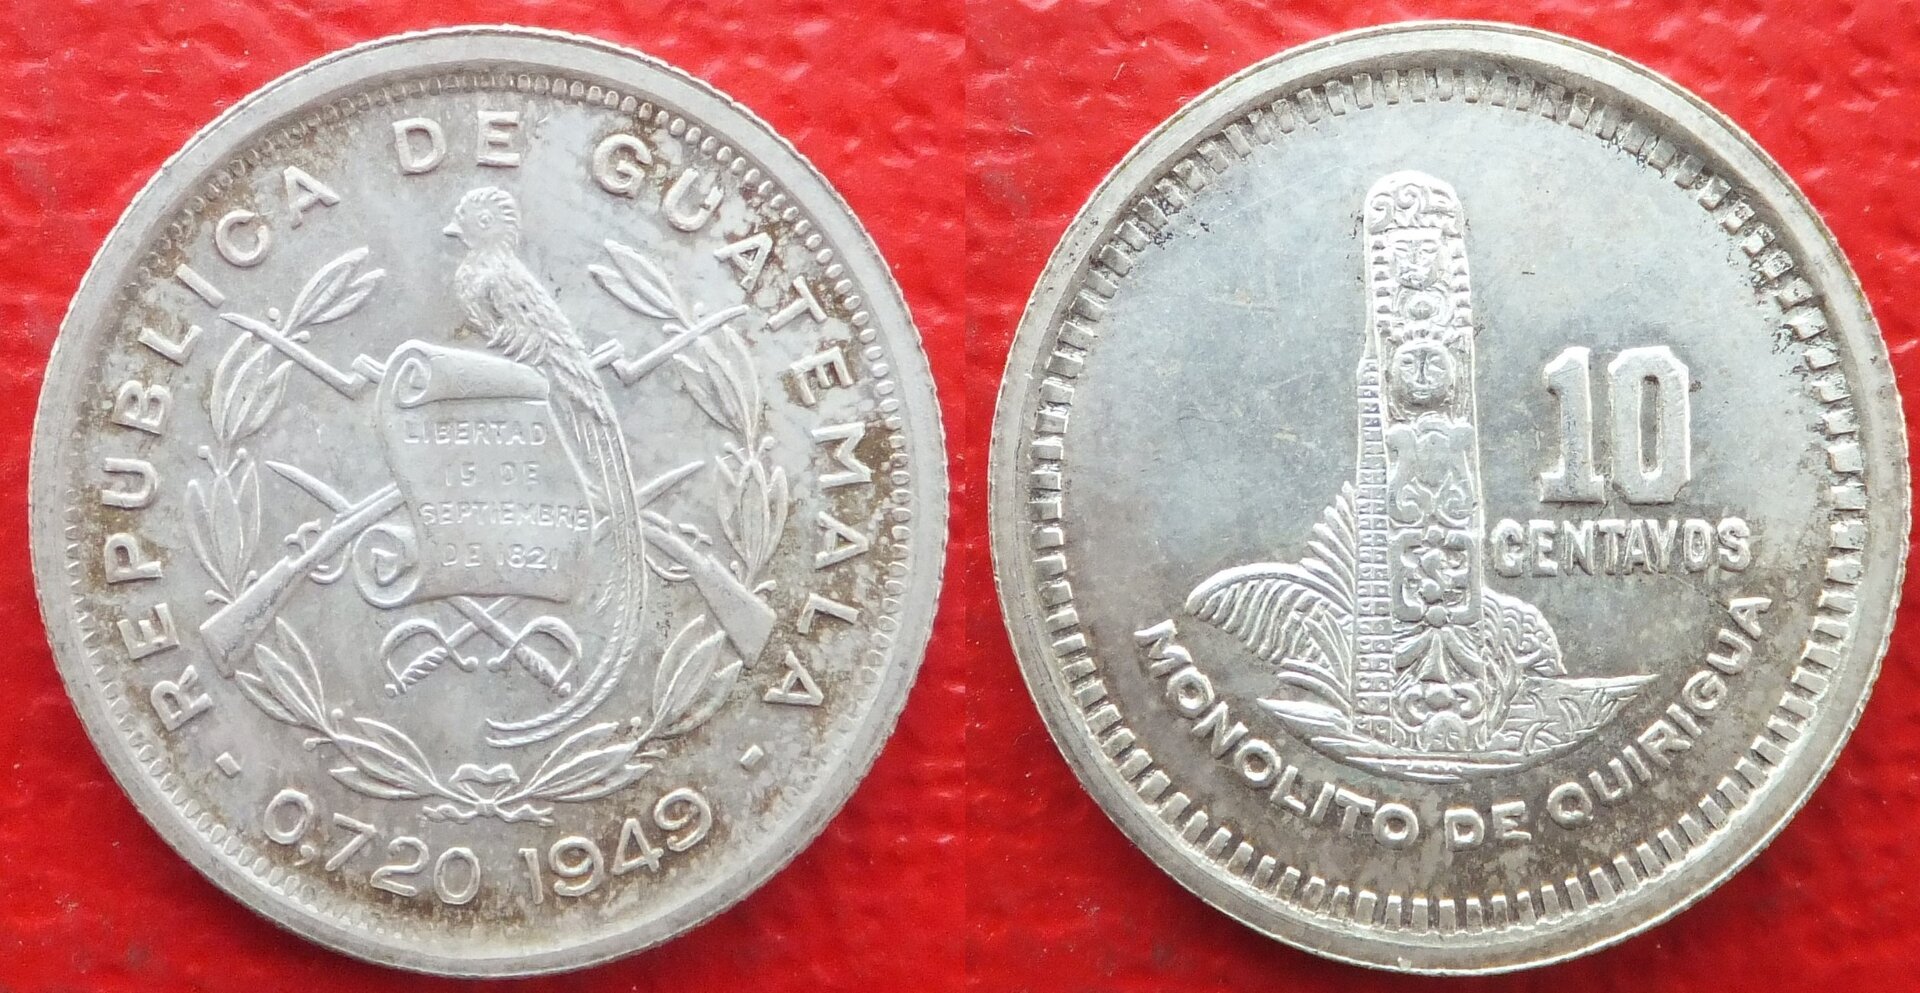 Guatemala 10 centavos 1949 (3).jpg